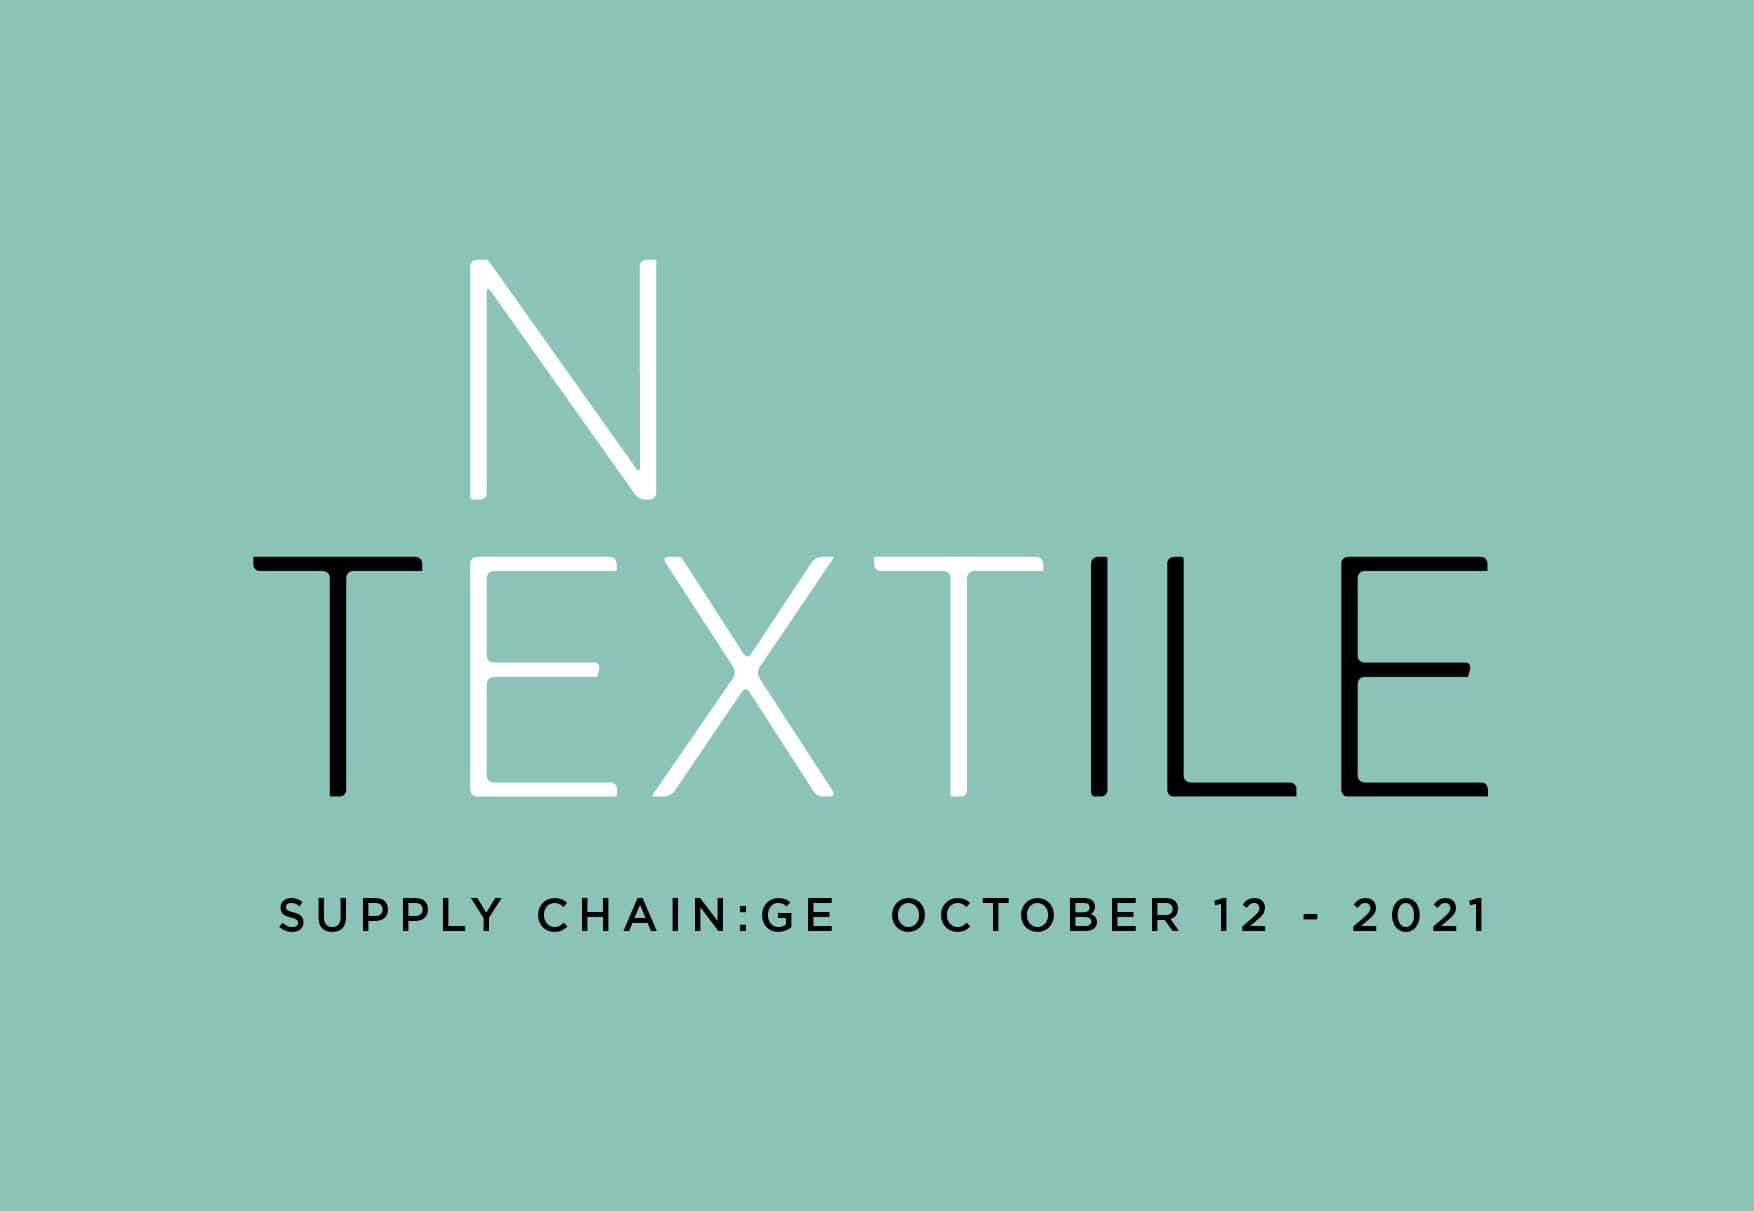 Next Textile